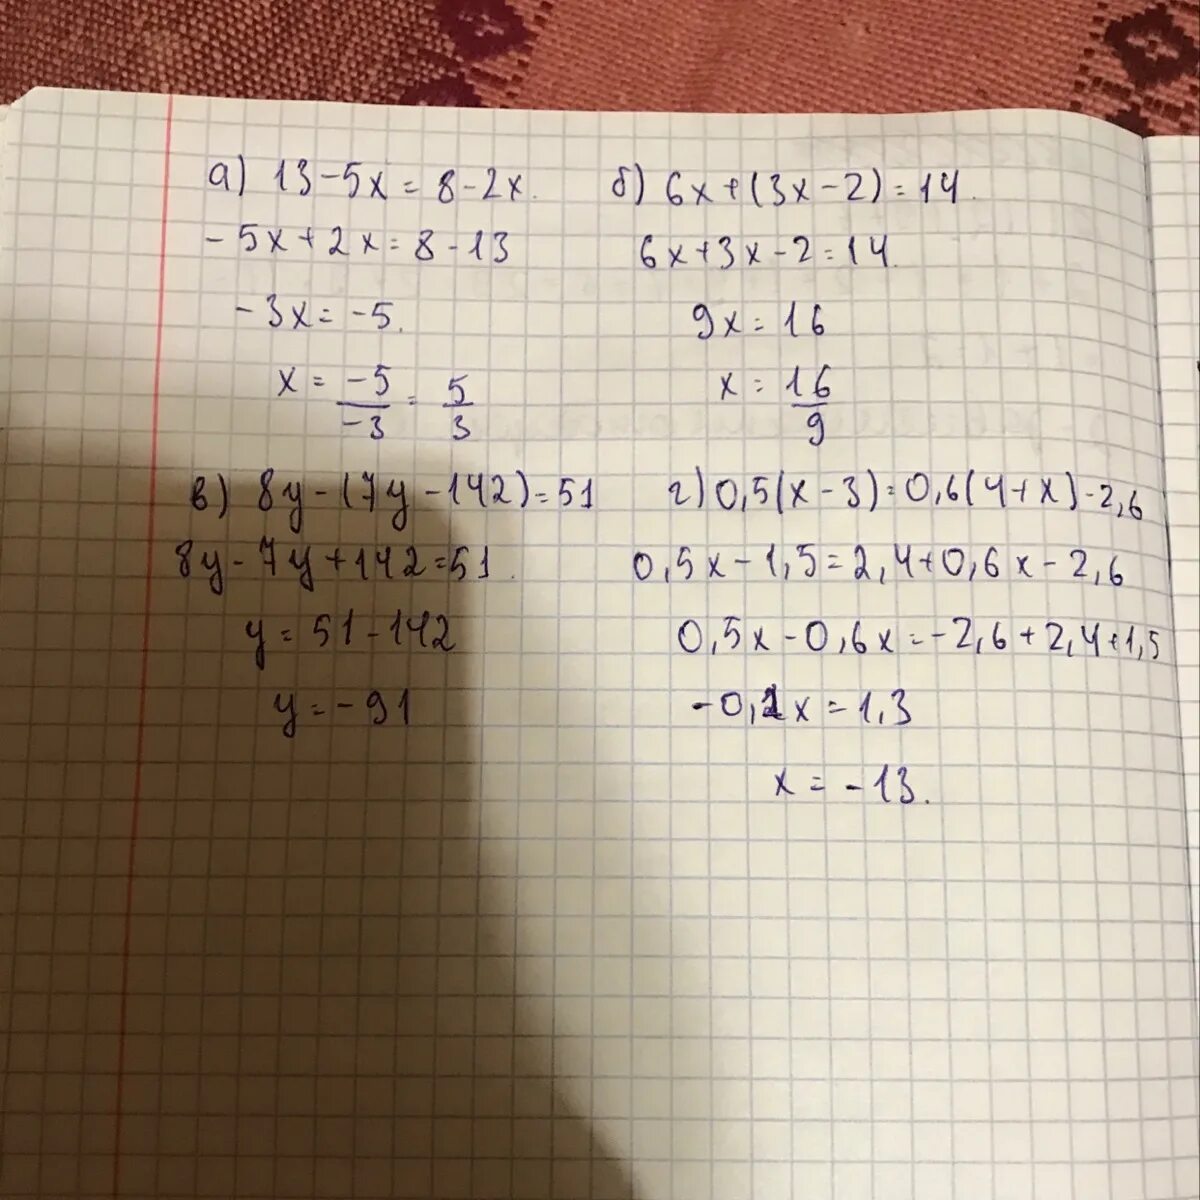 32 x 6 x 14. 8х-(7х-142)=51. Решение уравнения x+2x+6x+(6x-13)=77. Решить уравнение:x+(-6)=5. 1.9X+ 13=7x+ 5 решение.